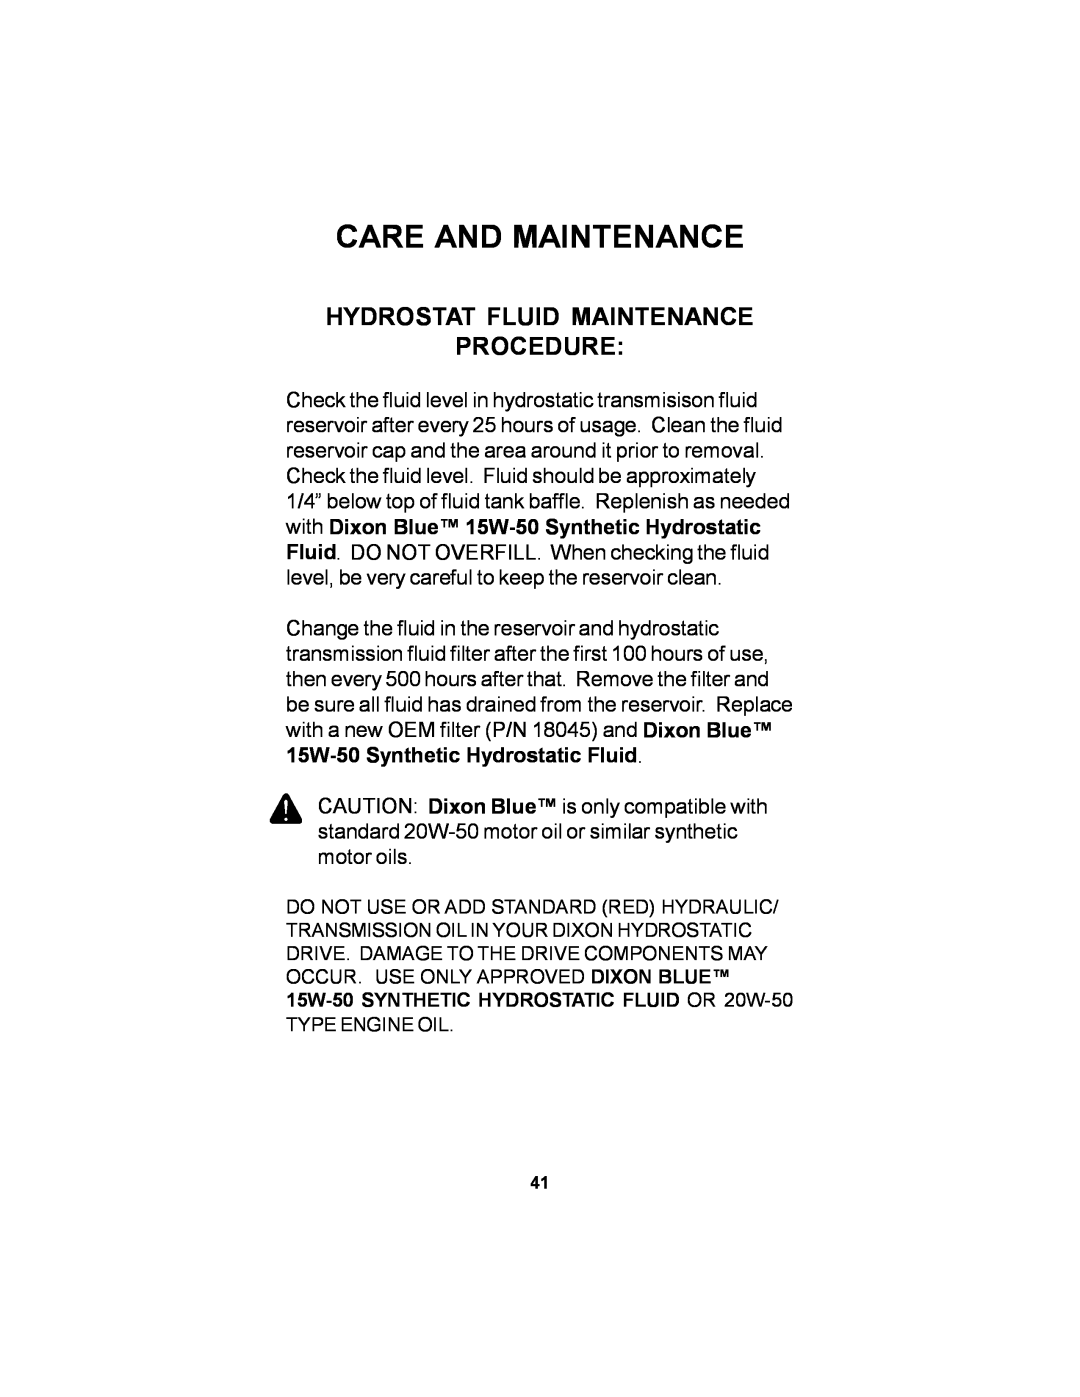 Dixon 12881-106 Hydrostat Fluid Maintenance Procedure, Care And Maintenance, 15W-50 SYNTHETIC HYDROSTATIC FLUID OR 20W-50 